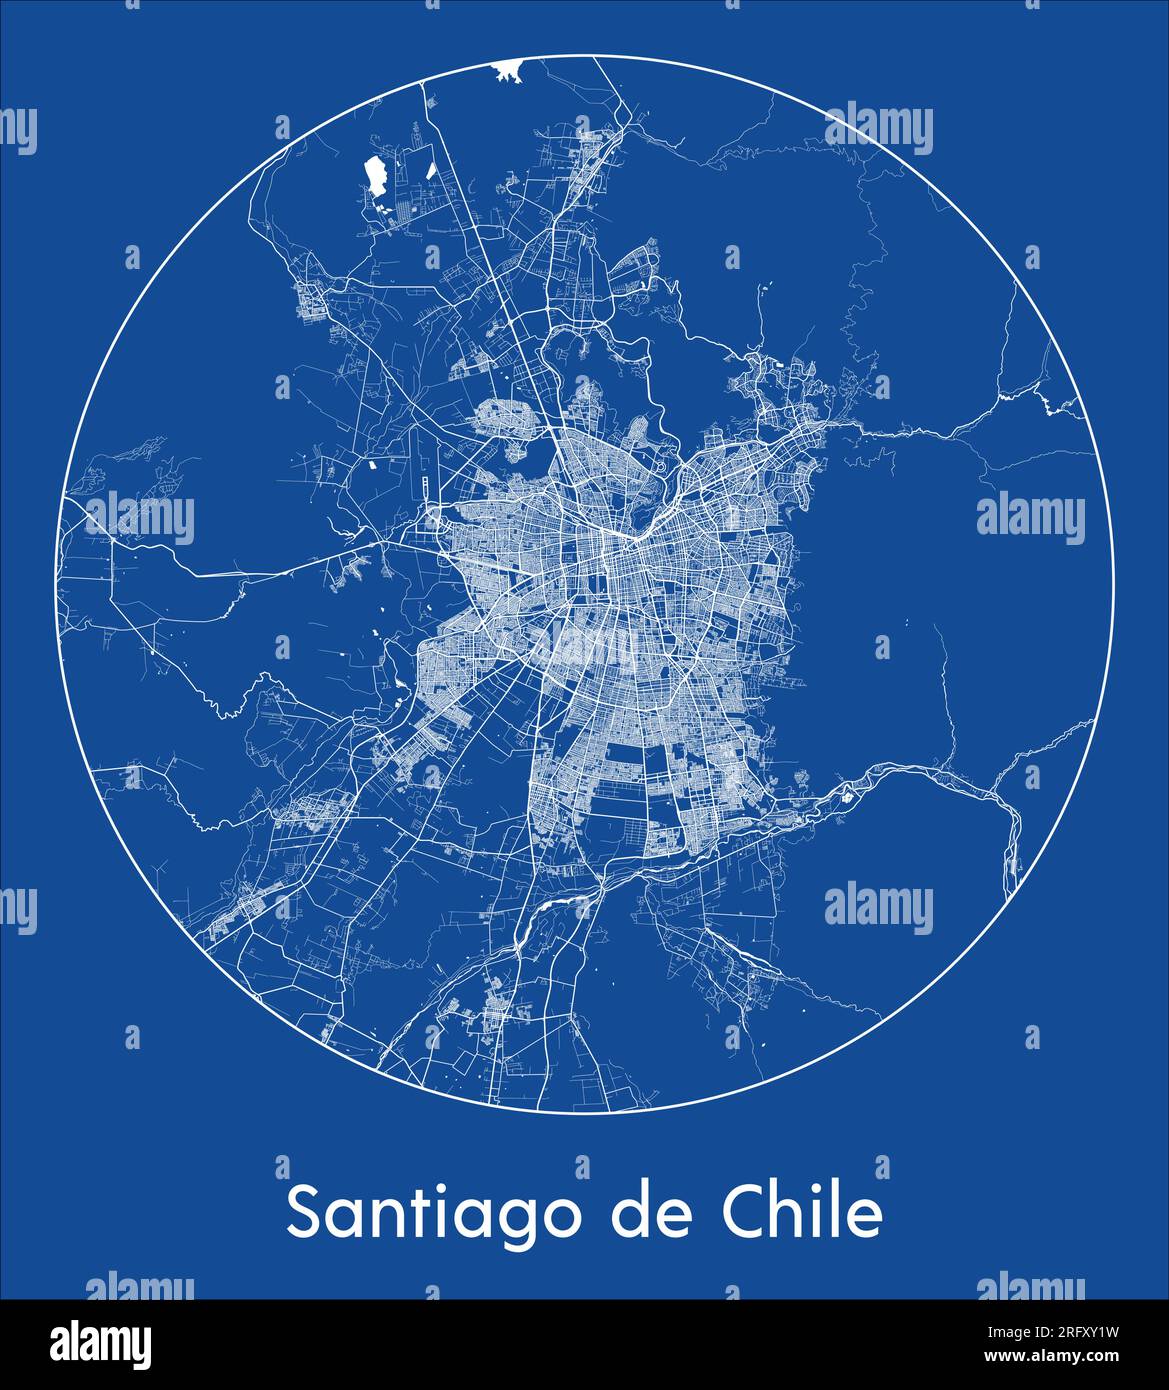 City Map Santiago de Chile Chile South America blue print round Circle vector illustration Stock Vector